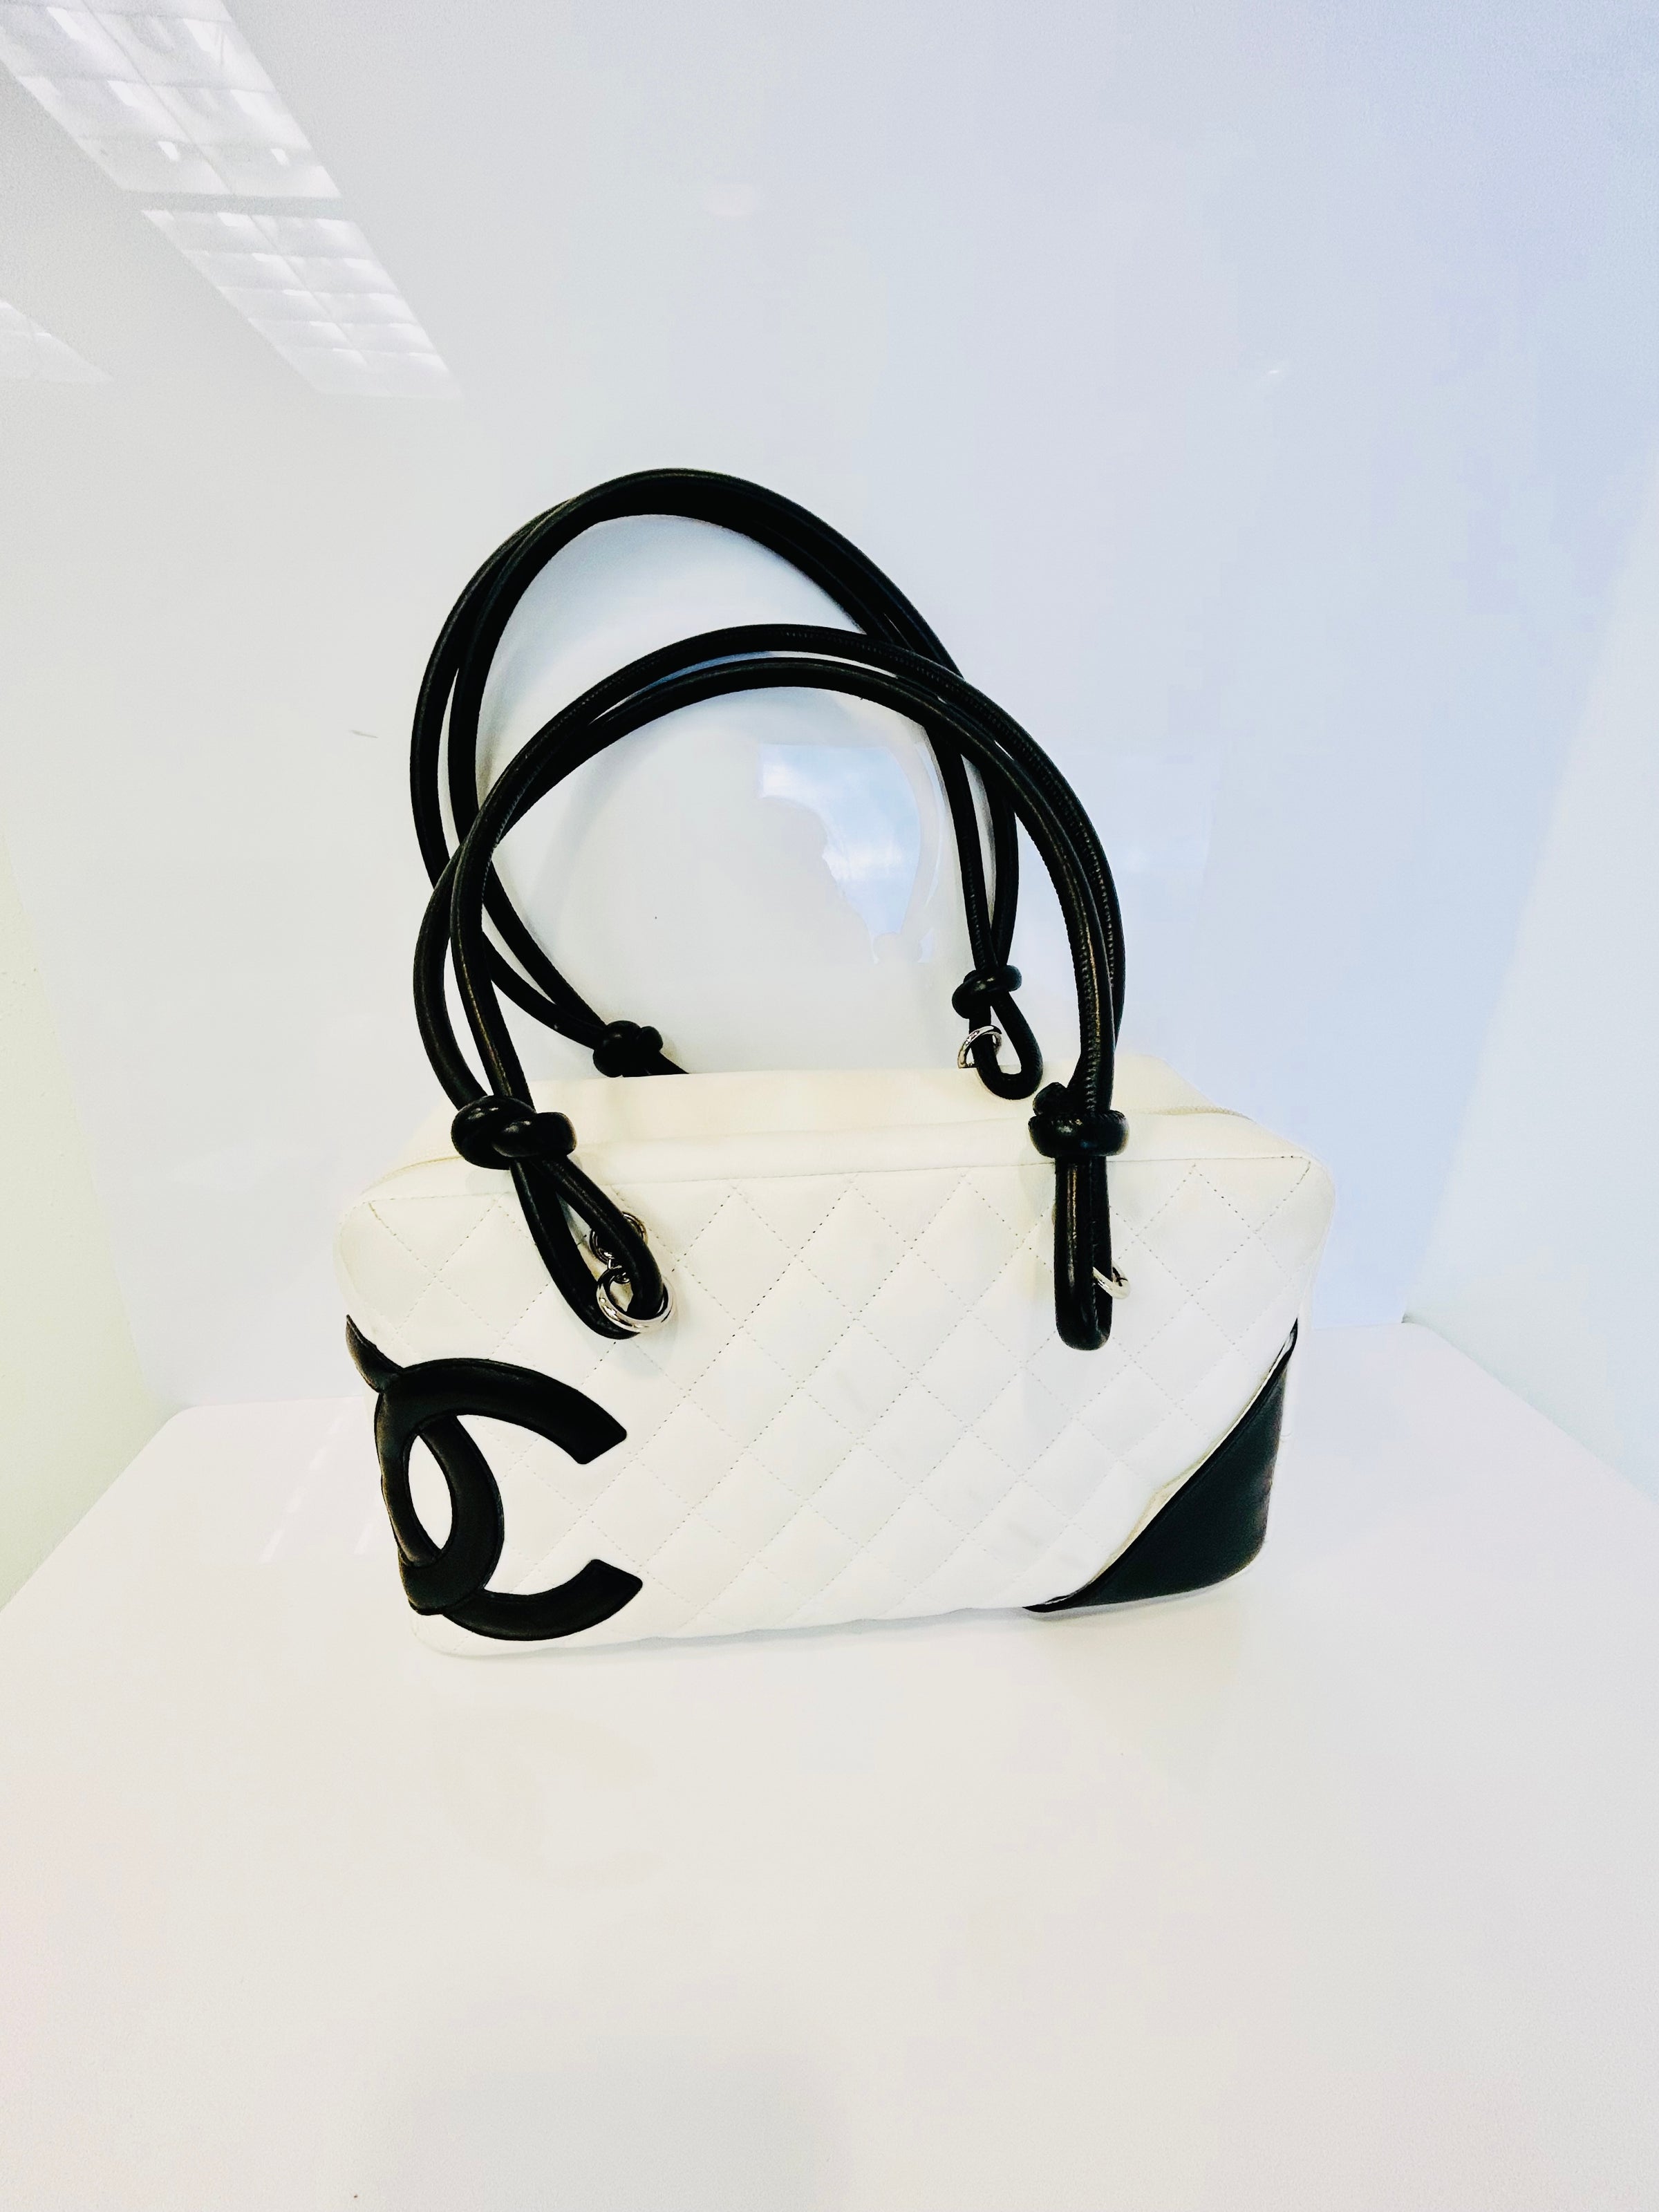 Chanel Cambon Ligne Bowler Bag